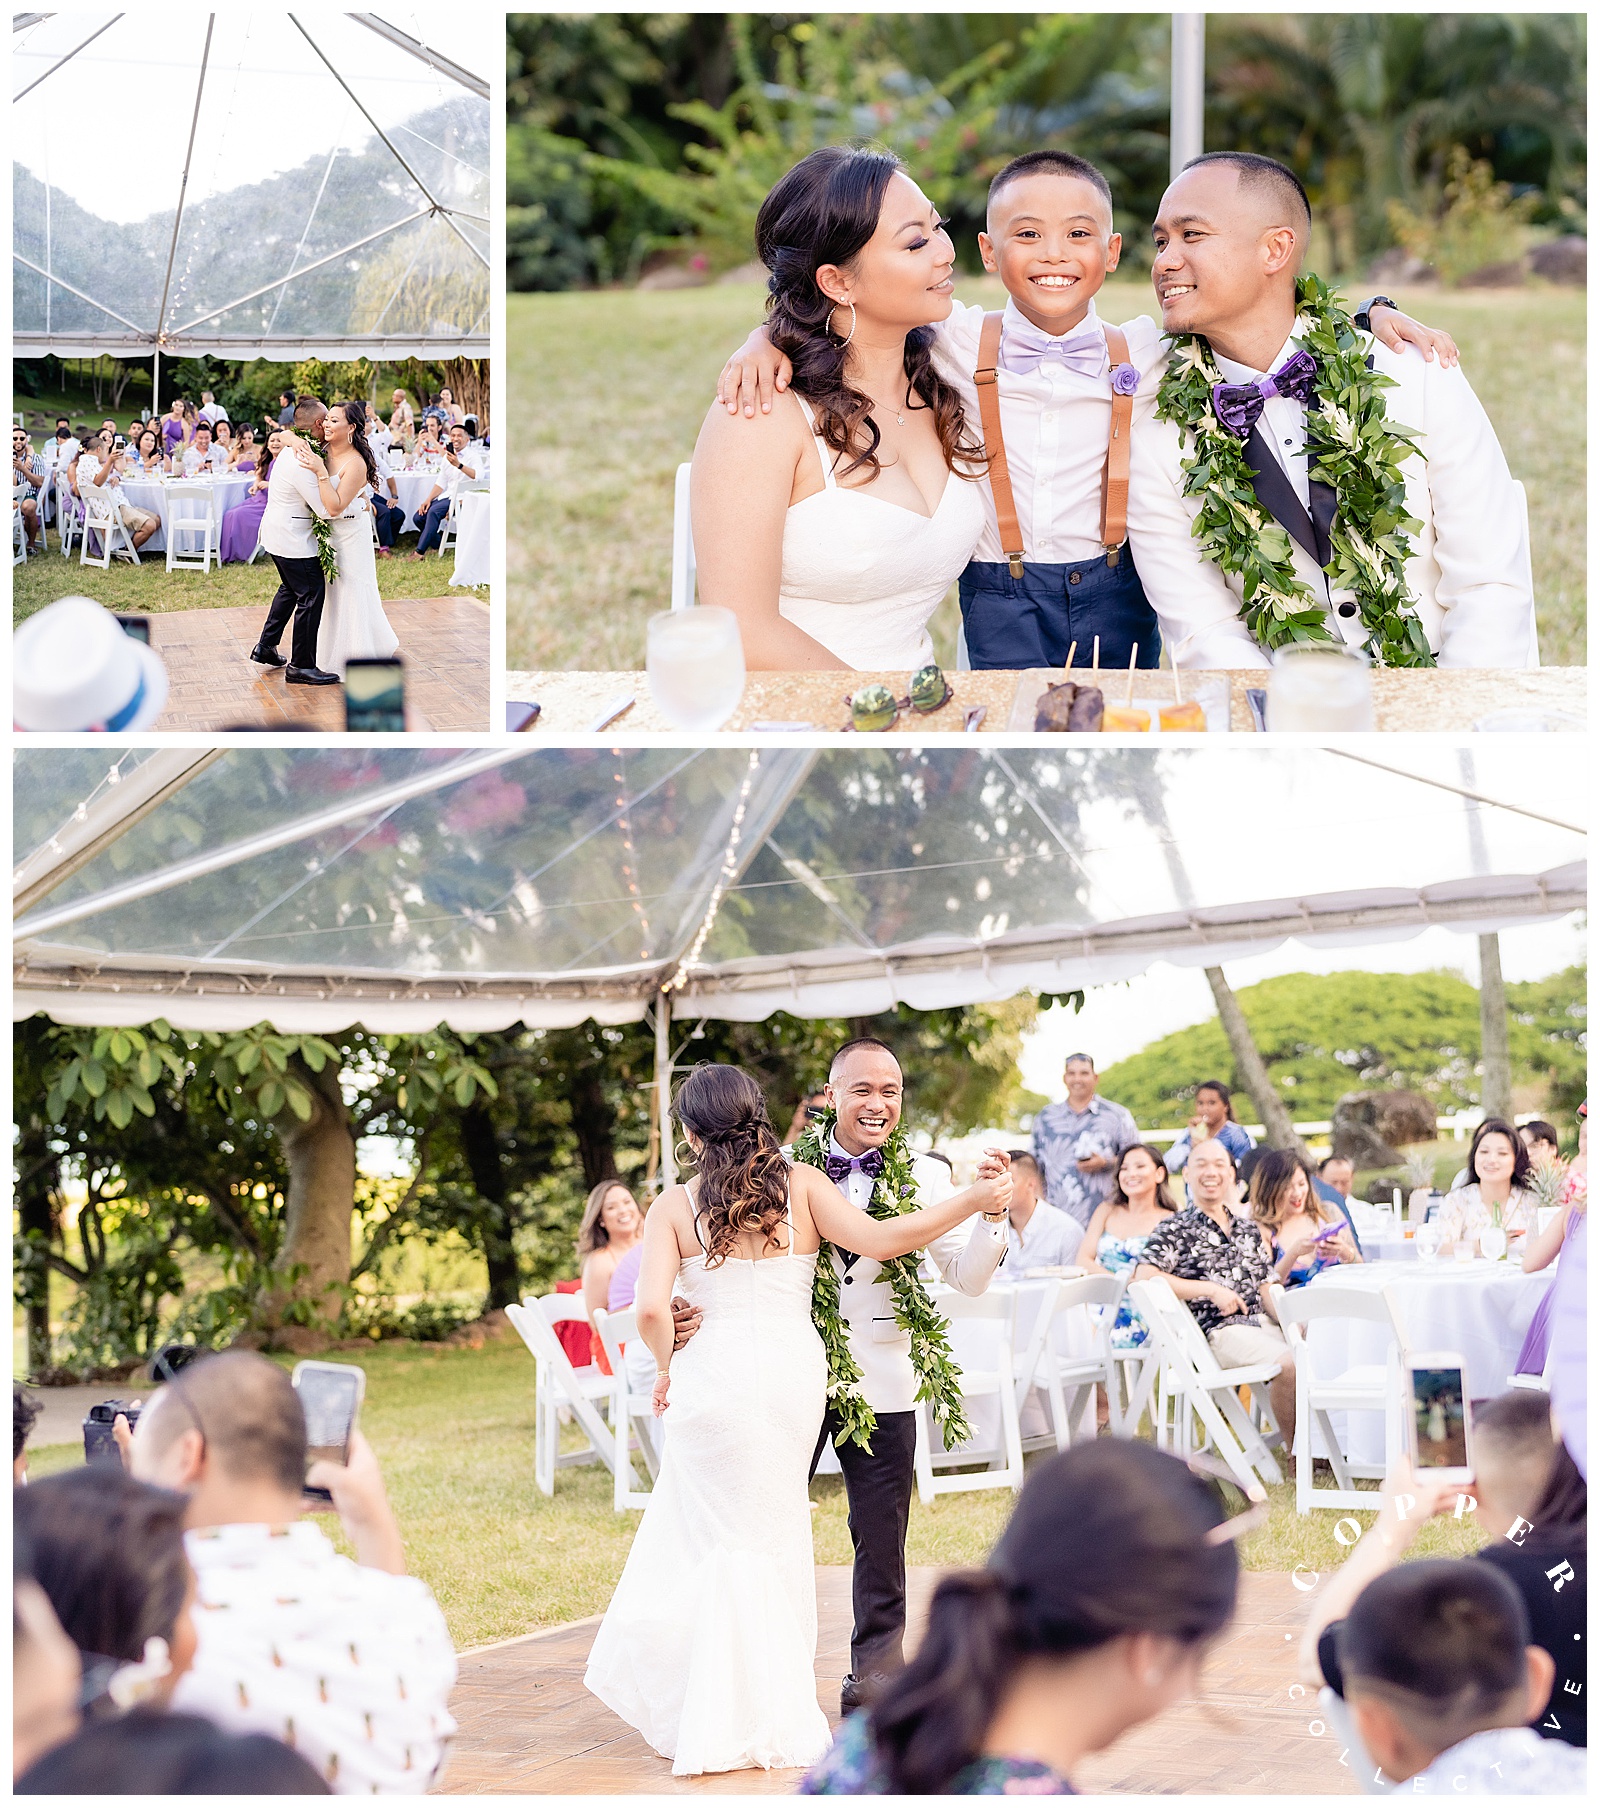 First dance at wedding reception at Kualoa Ranch Oahu